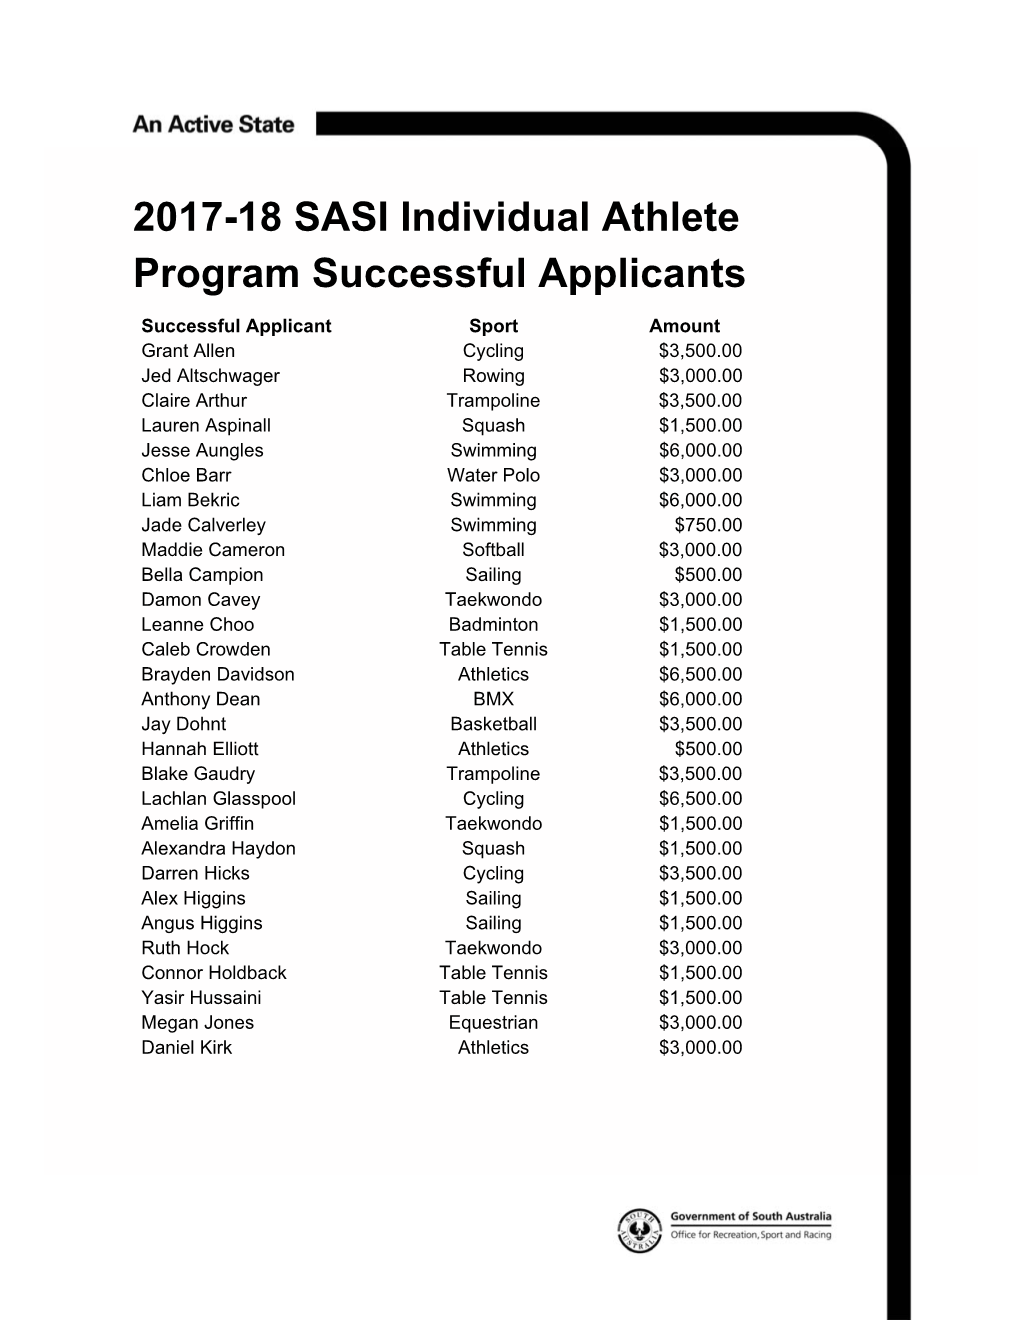 2017-18 SASI Individual Athlete Program Successful Applicants